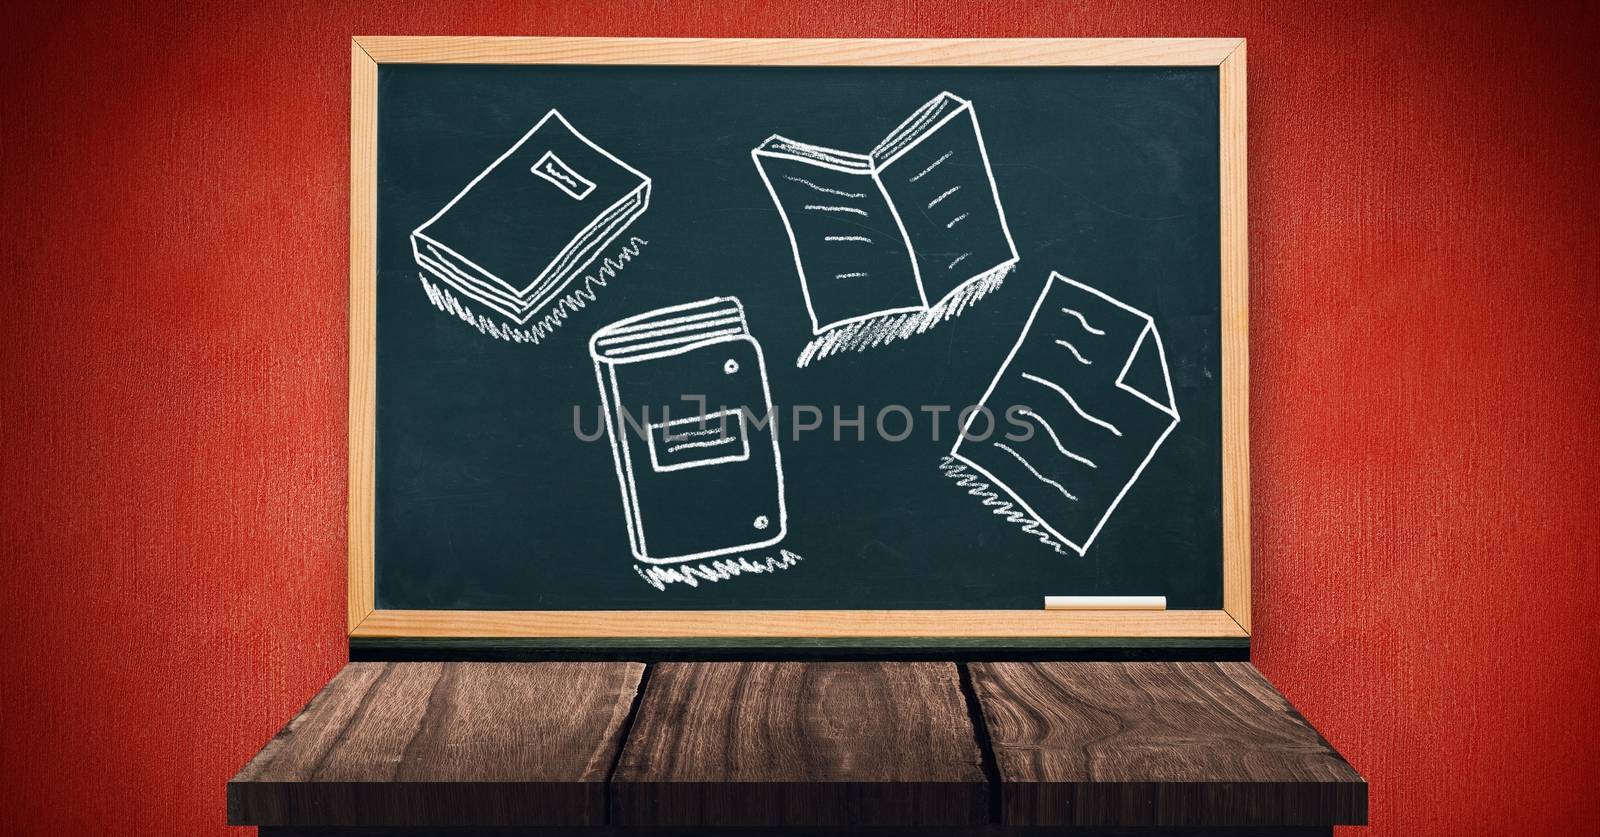 Folder notes and books on education blackboard by Wavebreakmedia